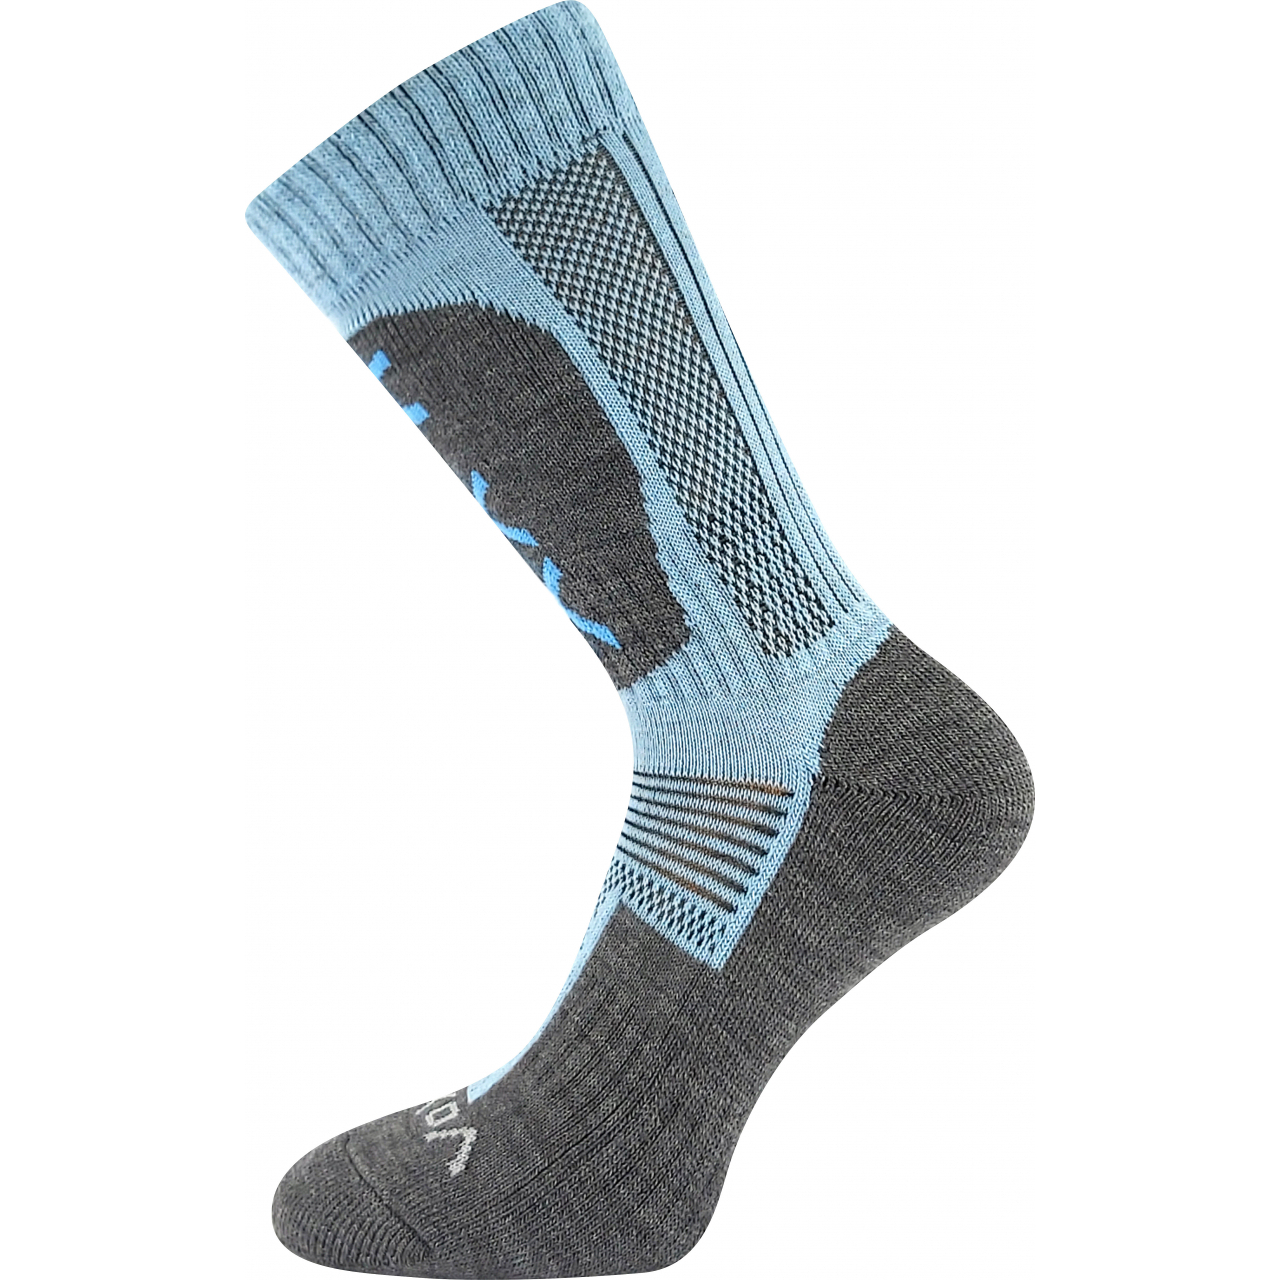 Ponožky unisex silné Voxx Nordick - modré, 39-42